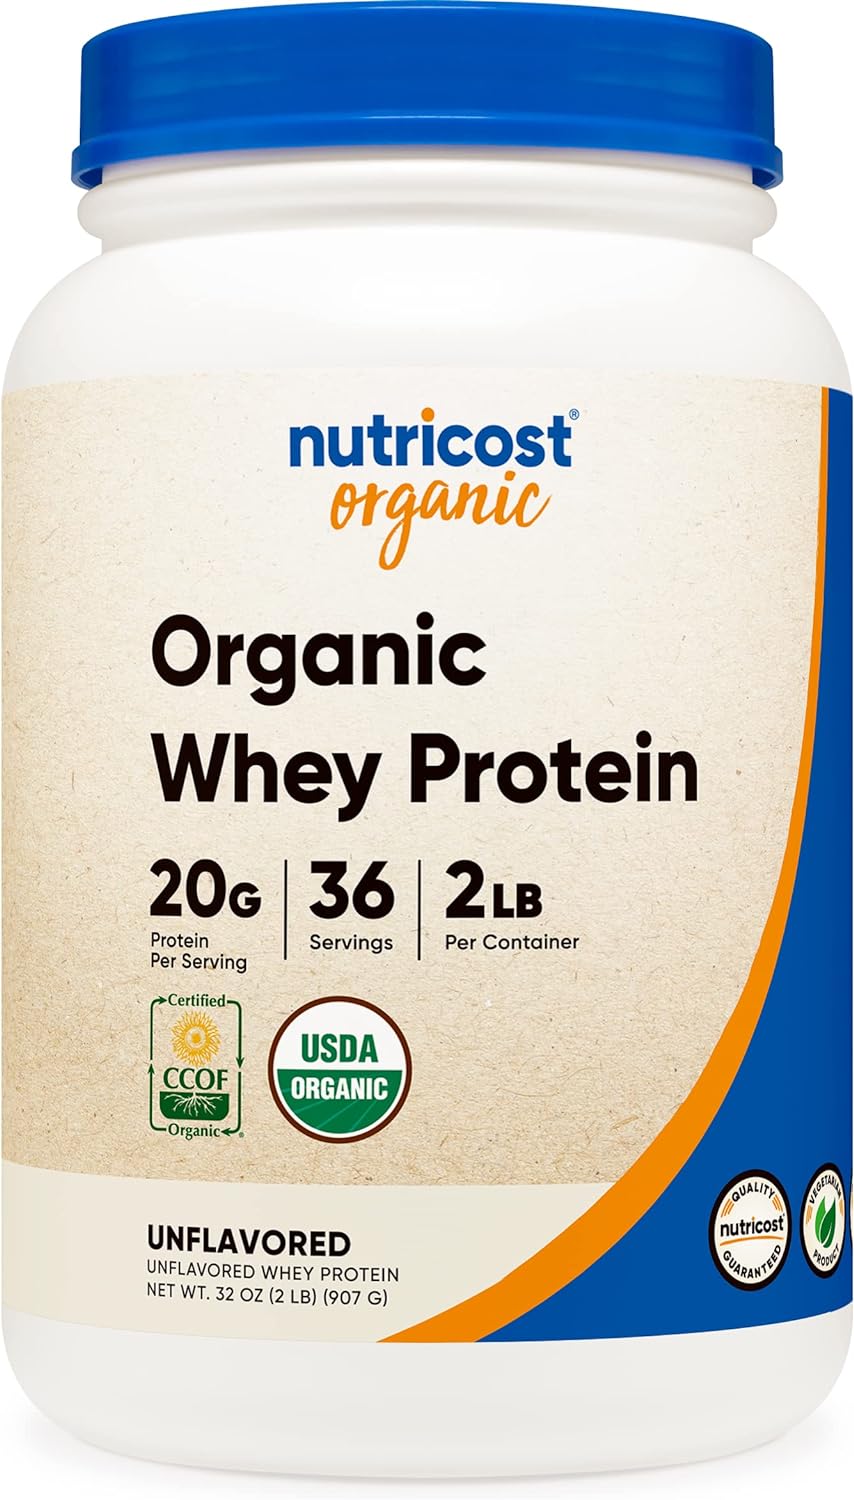 Nutricost Organic Whey Protein Powder (Unflavored) 2 LB - Non-GMOUnfla